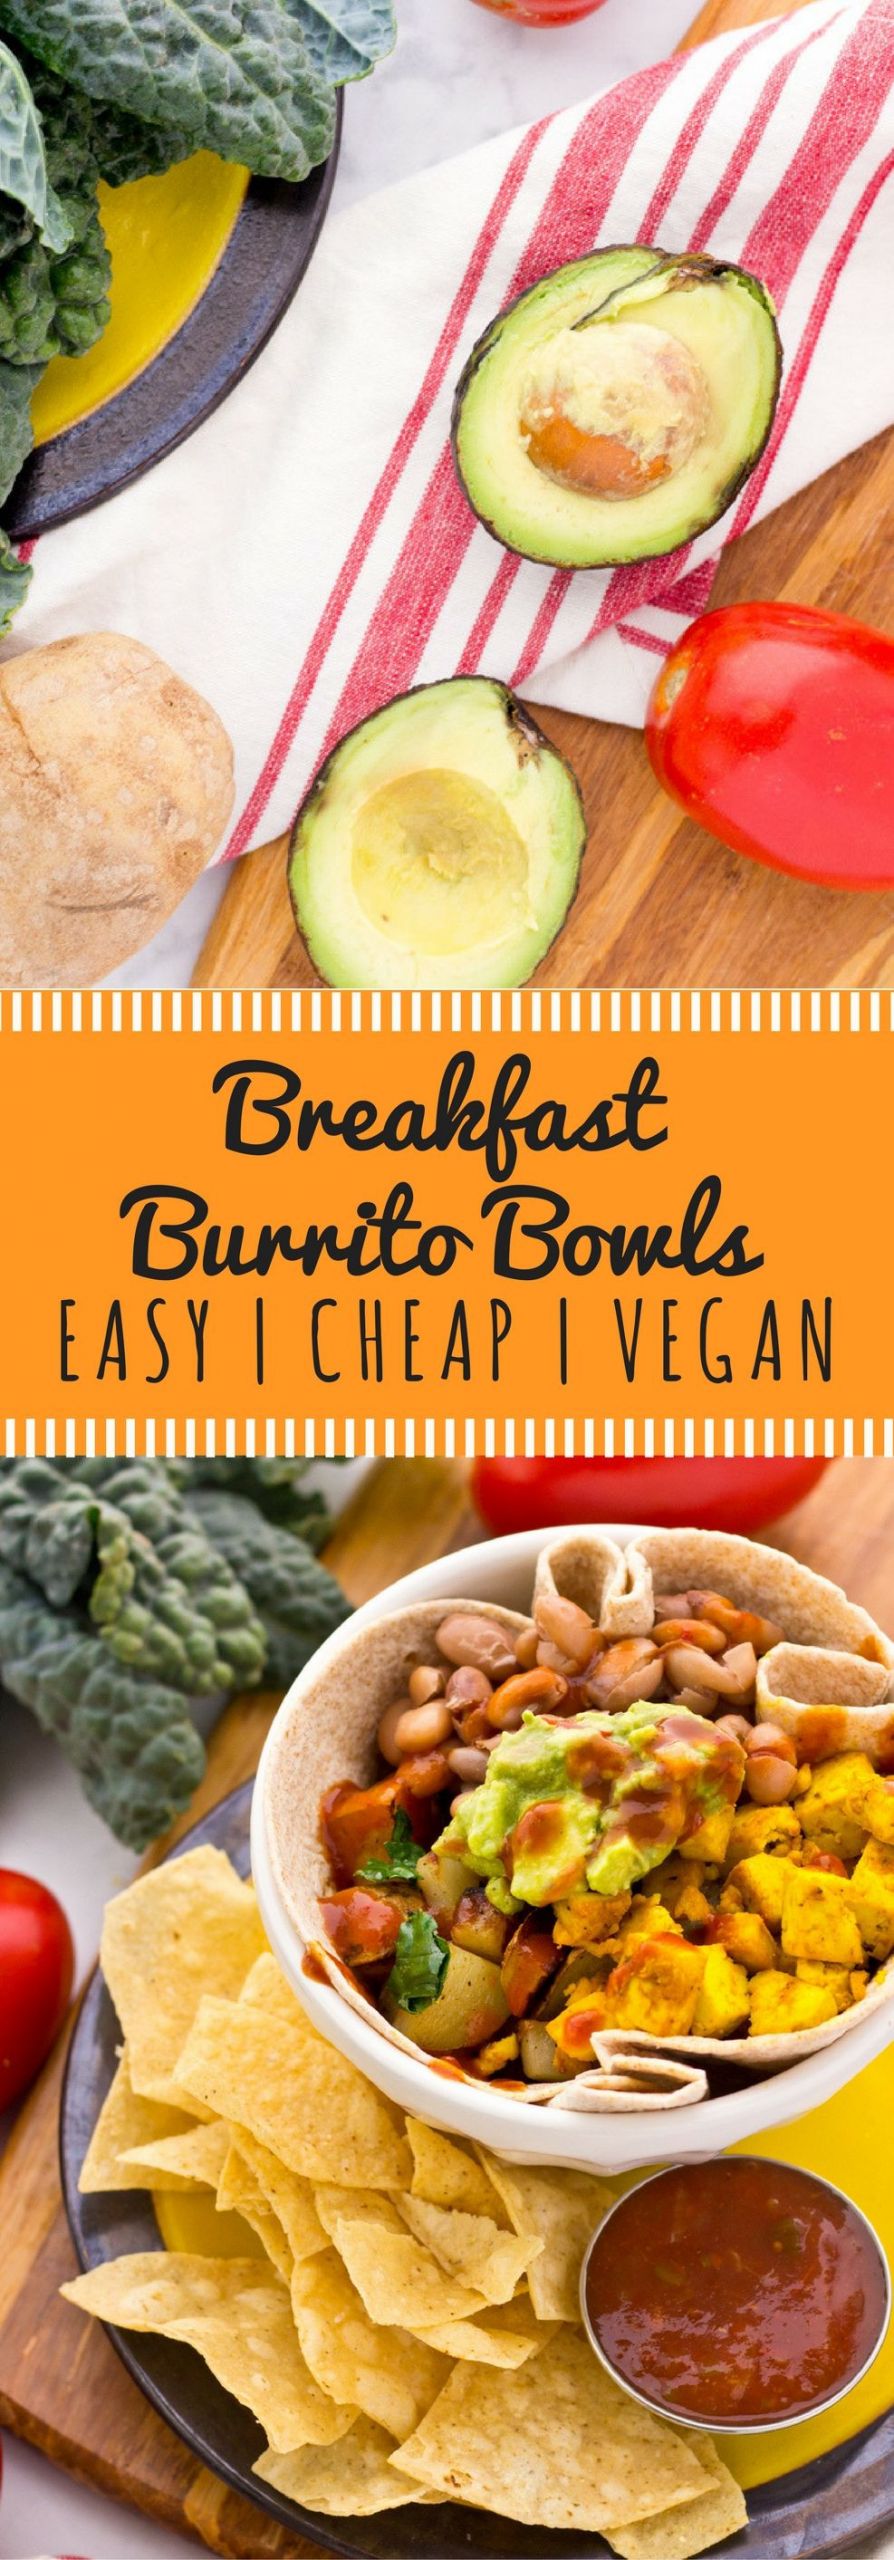 Cheap Vegan Breakfast
 Cheap & Vegan Breakfast Burrito Bowl Recipe